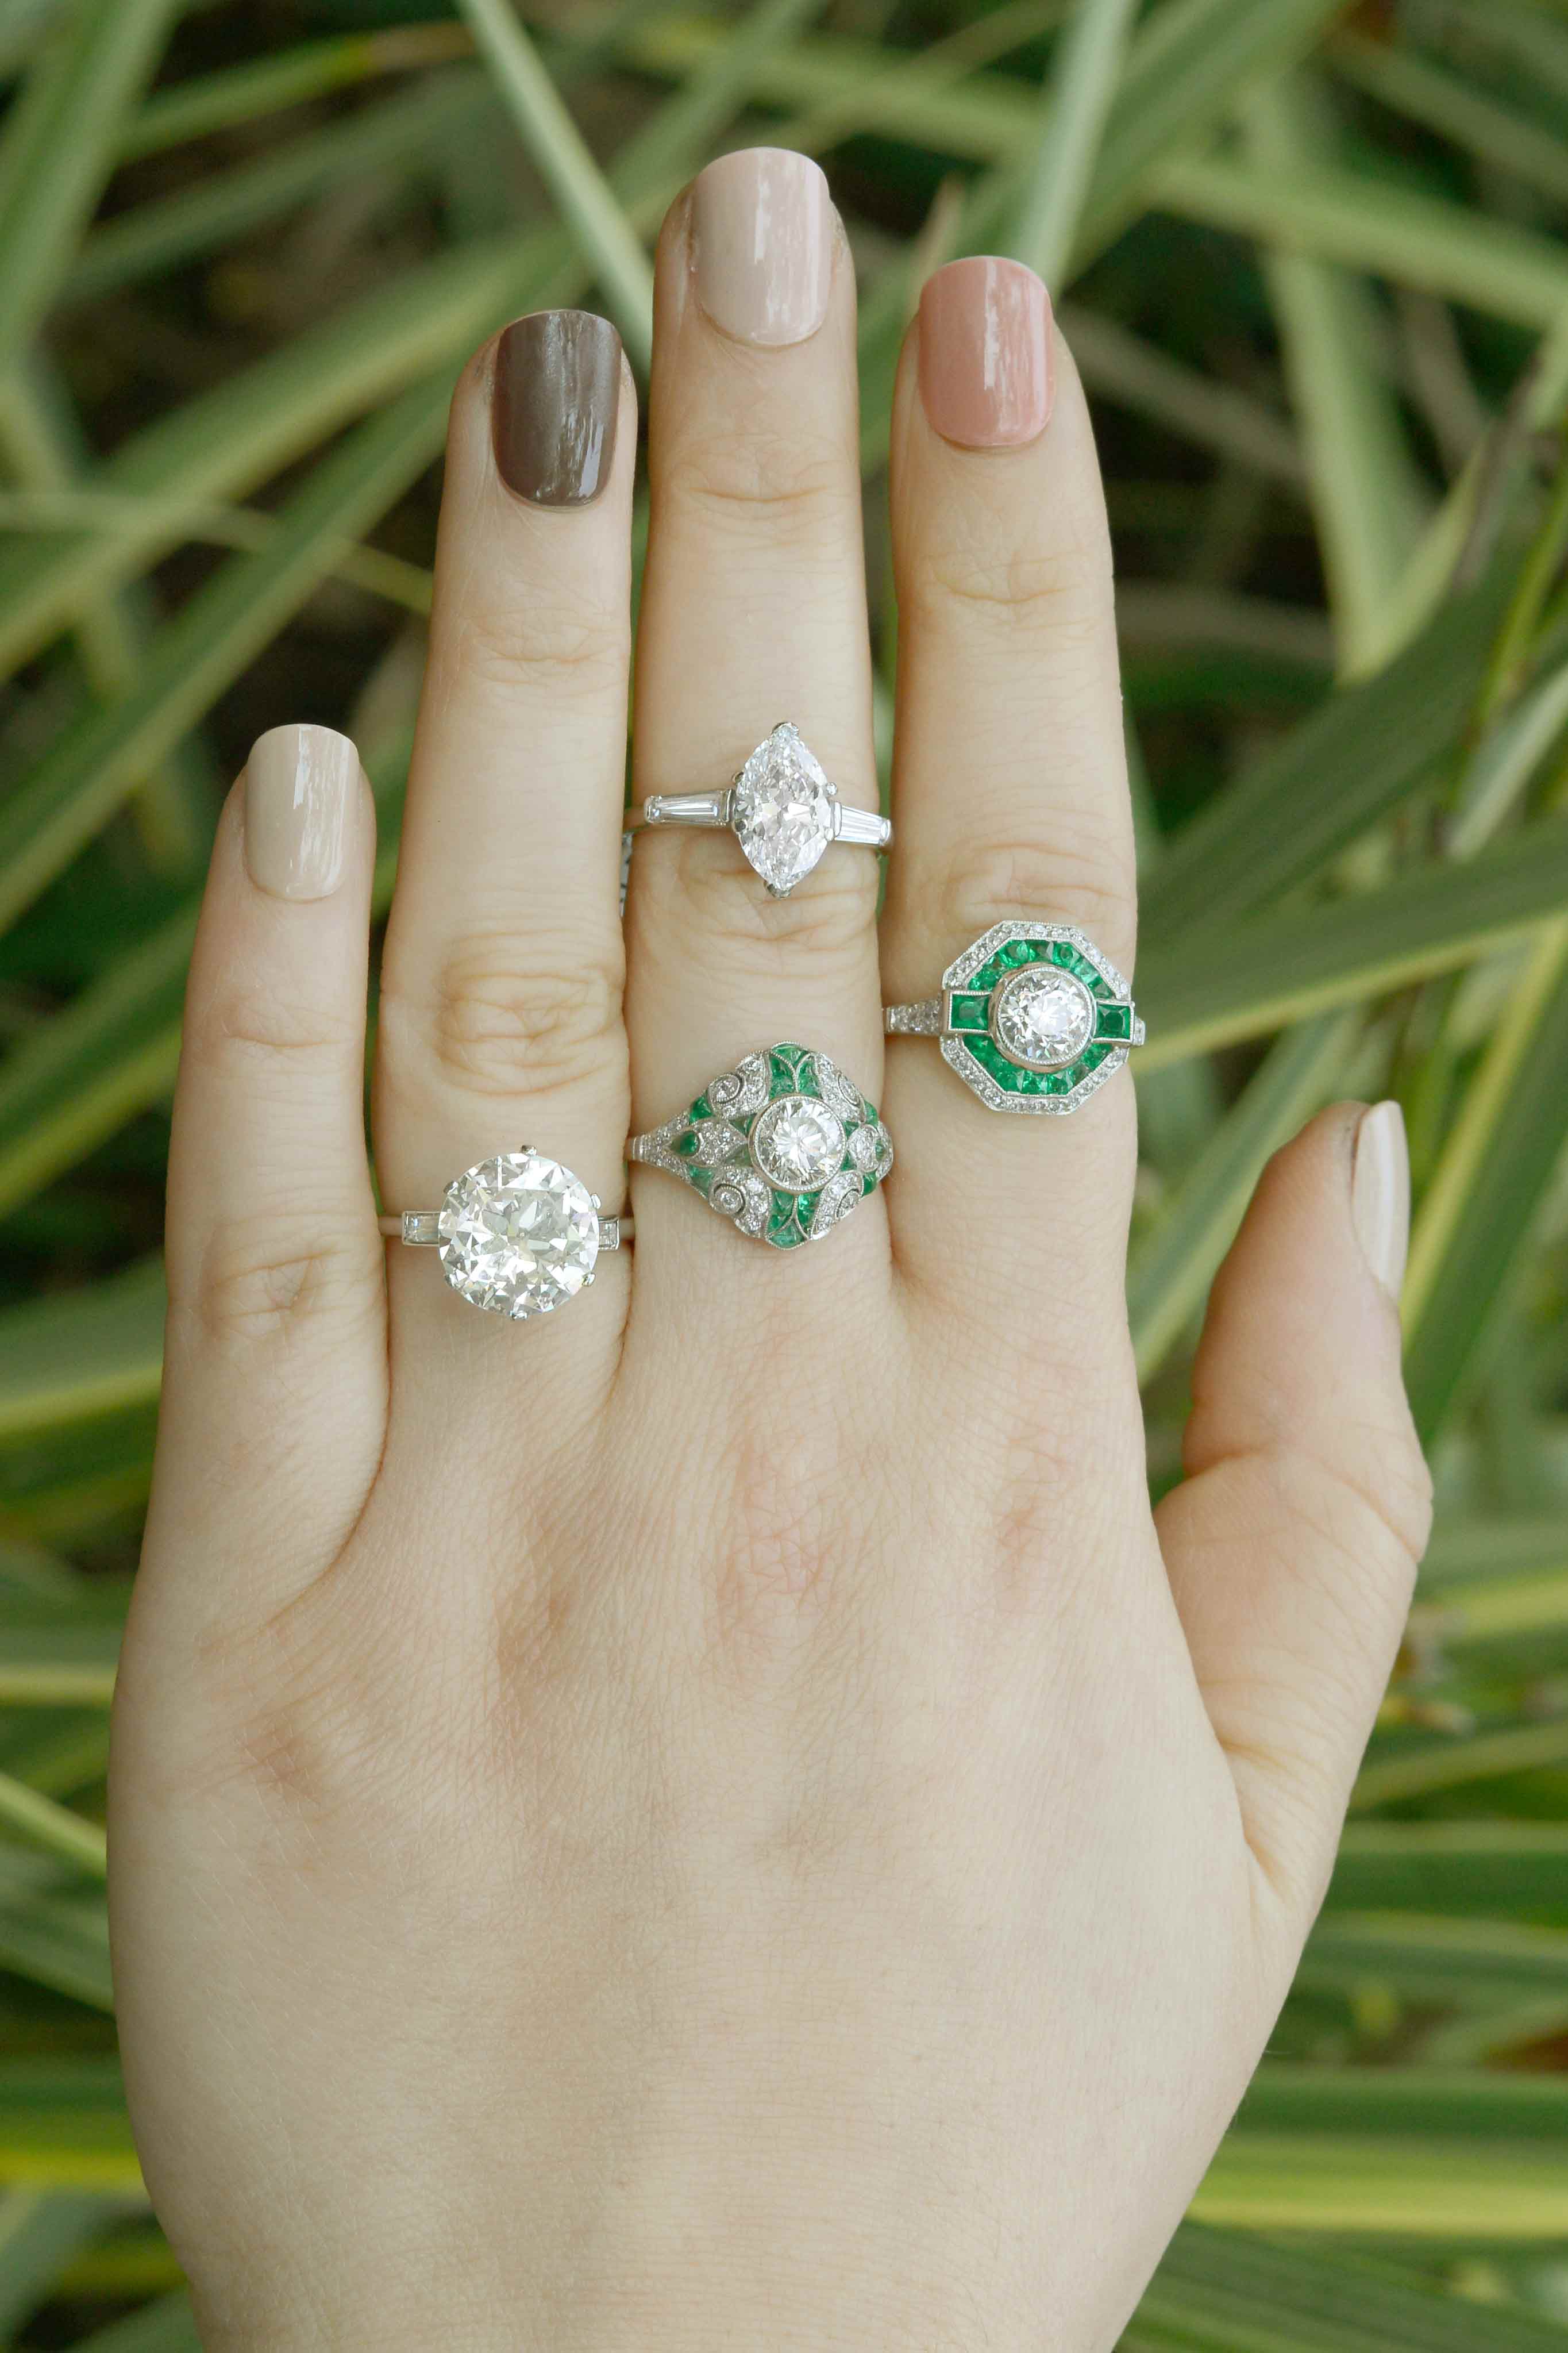 Certified Diamond Engagement Ring